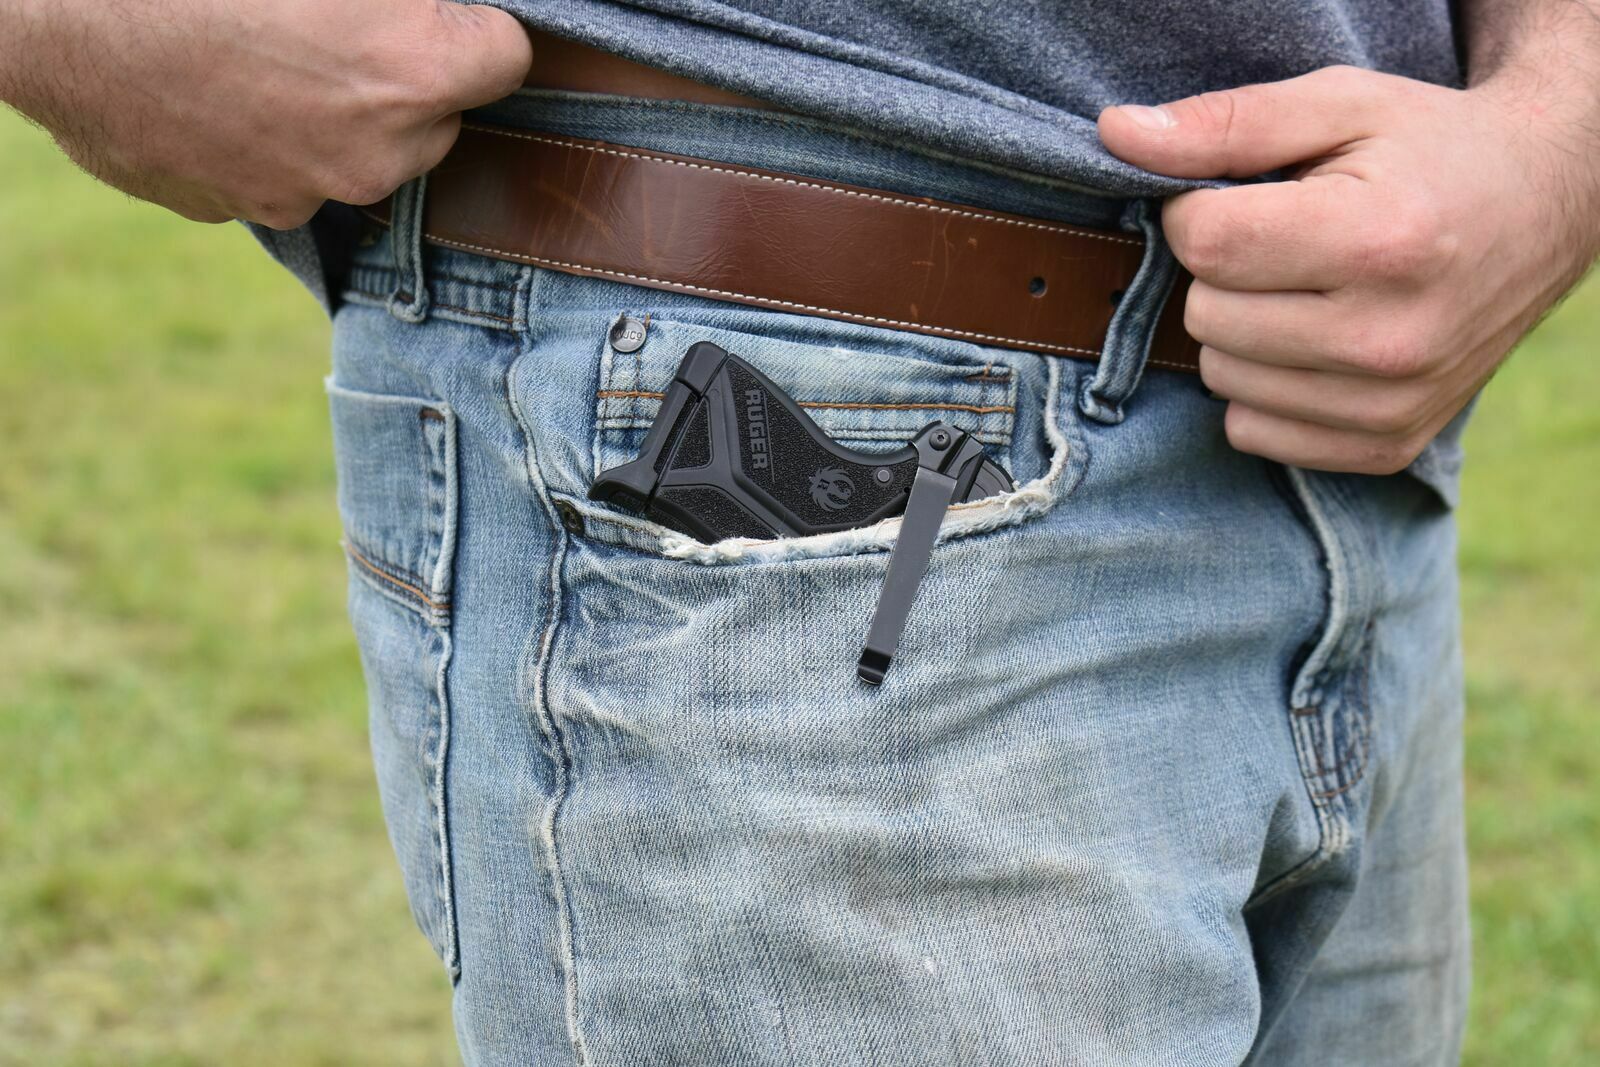 Gun Clip attached to a pocket